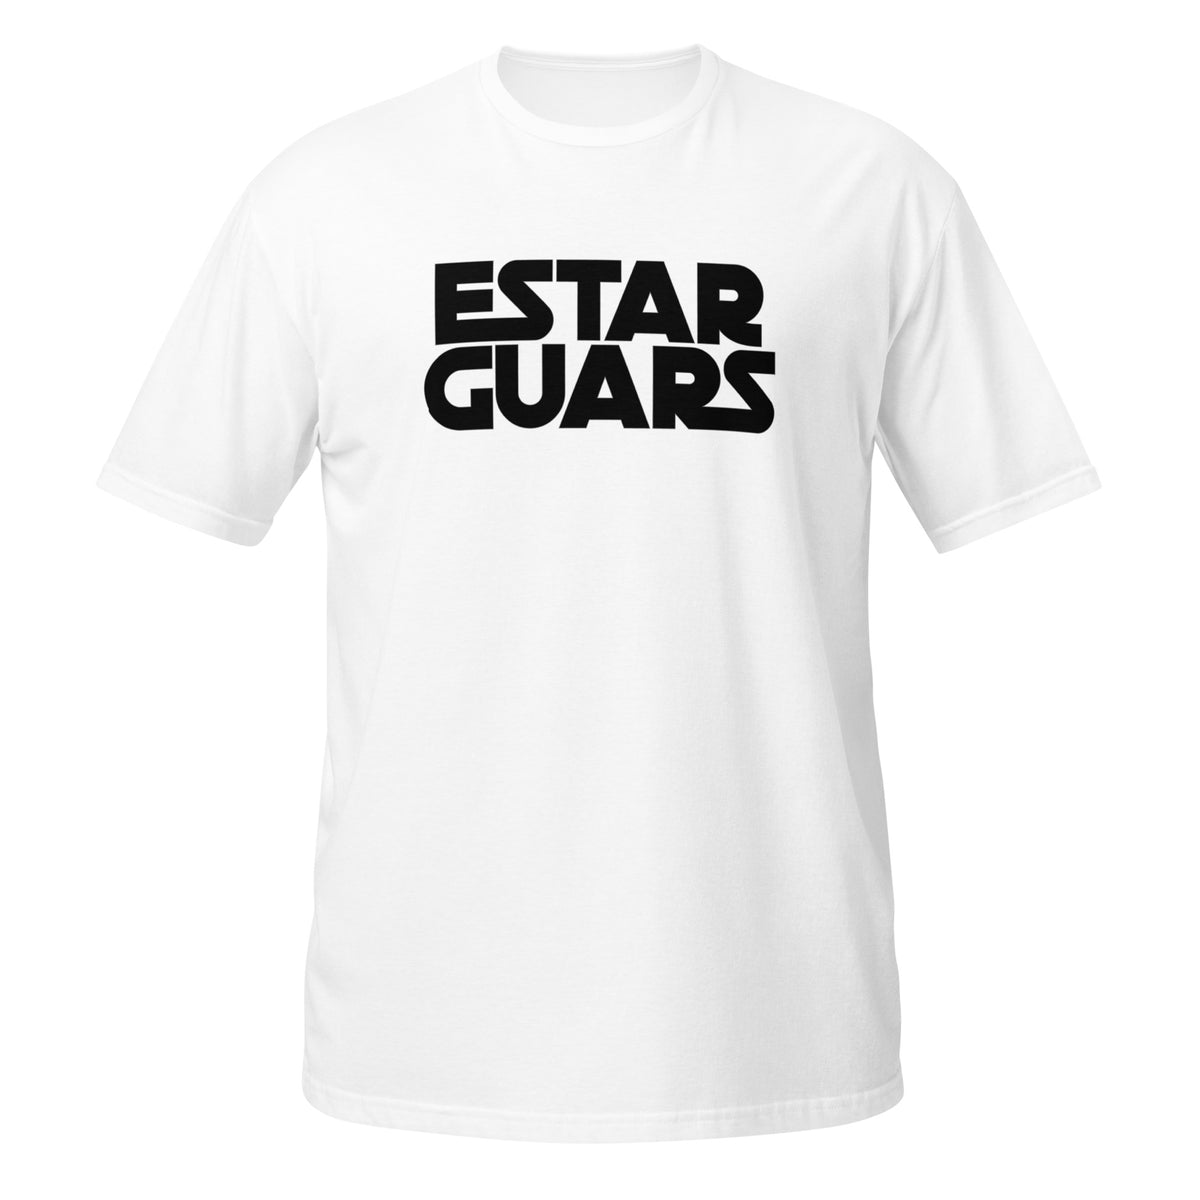 Estar Guars (Star Wars) T-Shirt